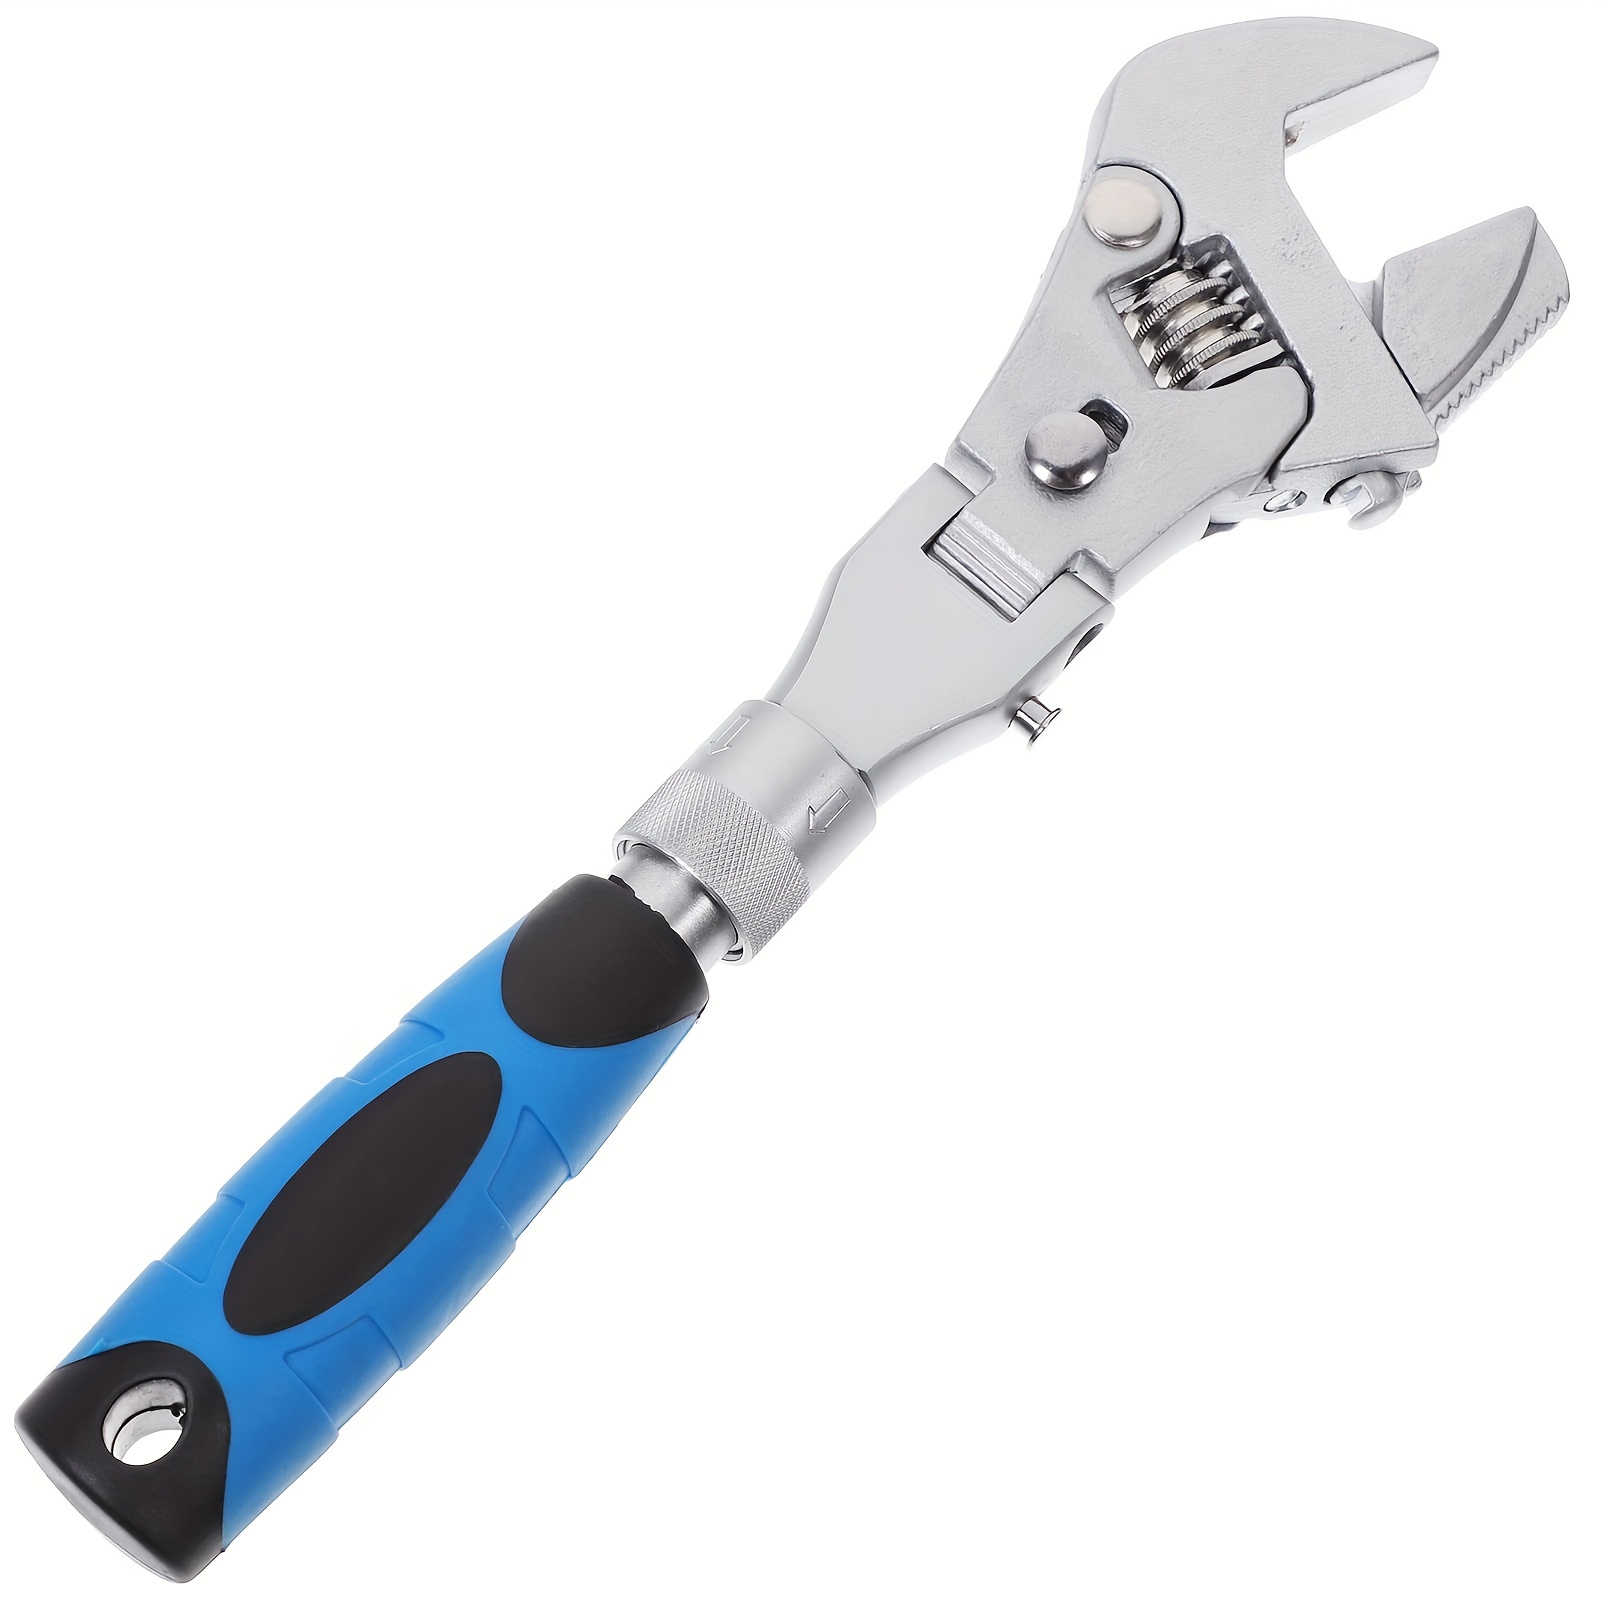 Adjustable and Ratchet Digital Torque Wrenches - GEK